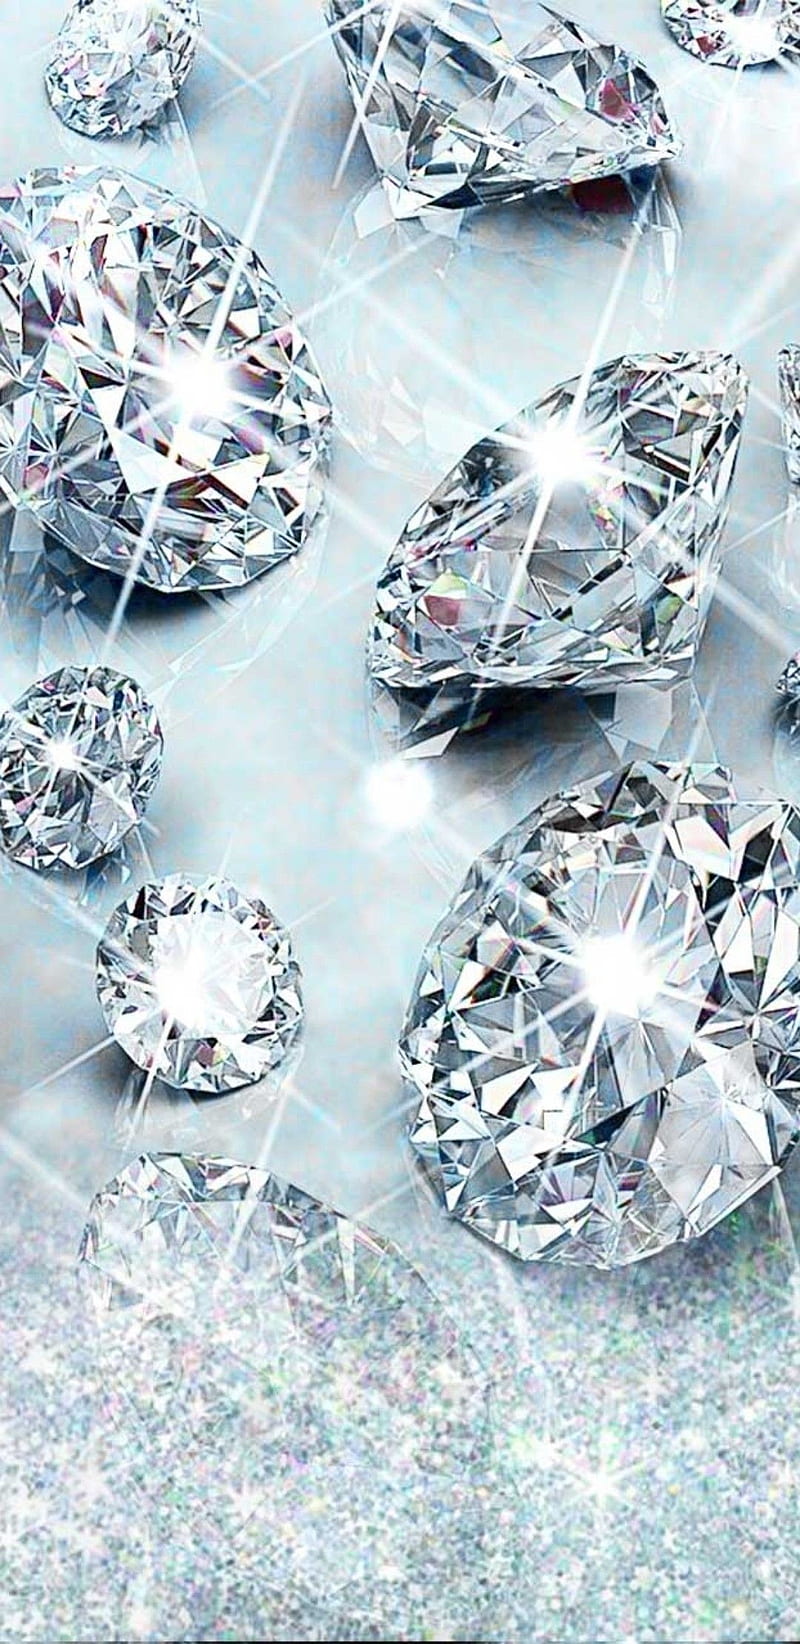 diamond background